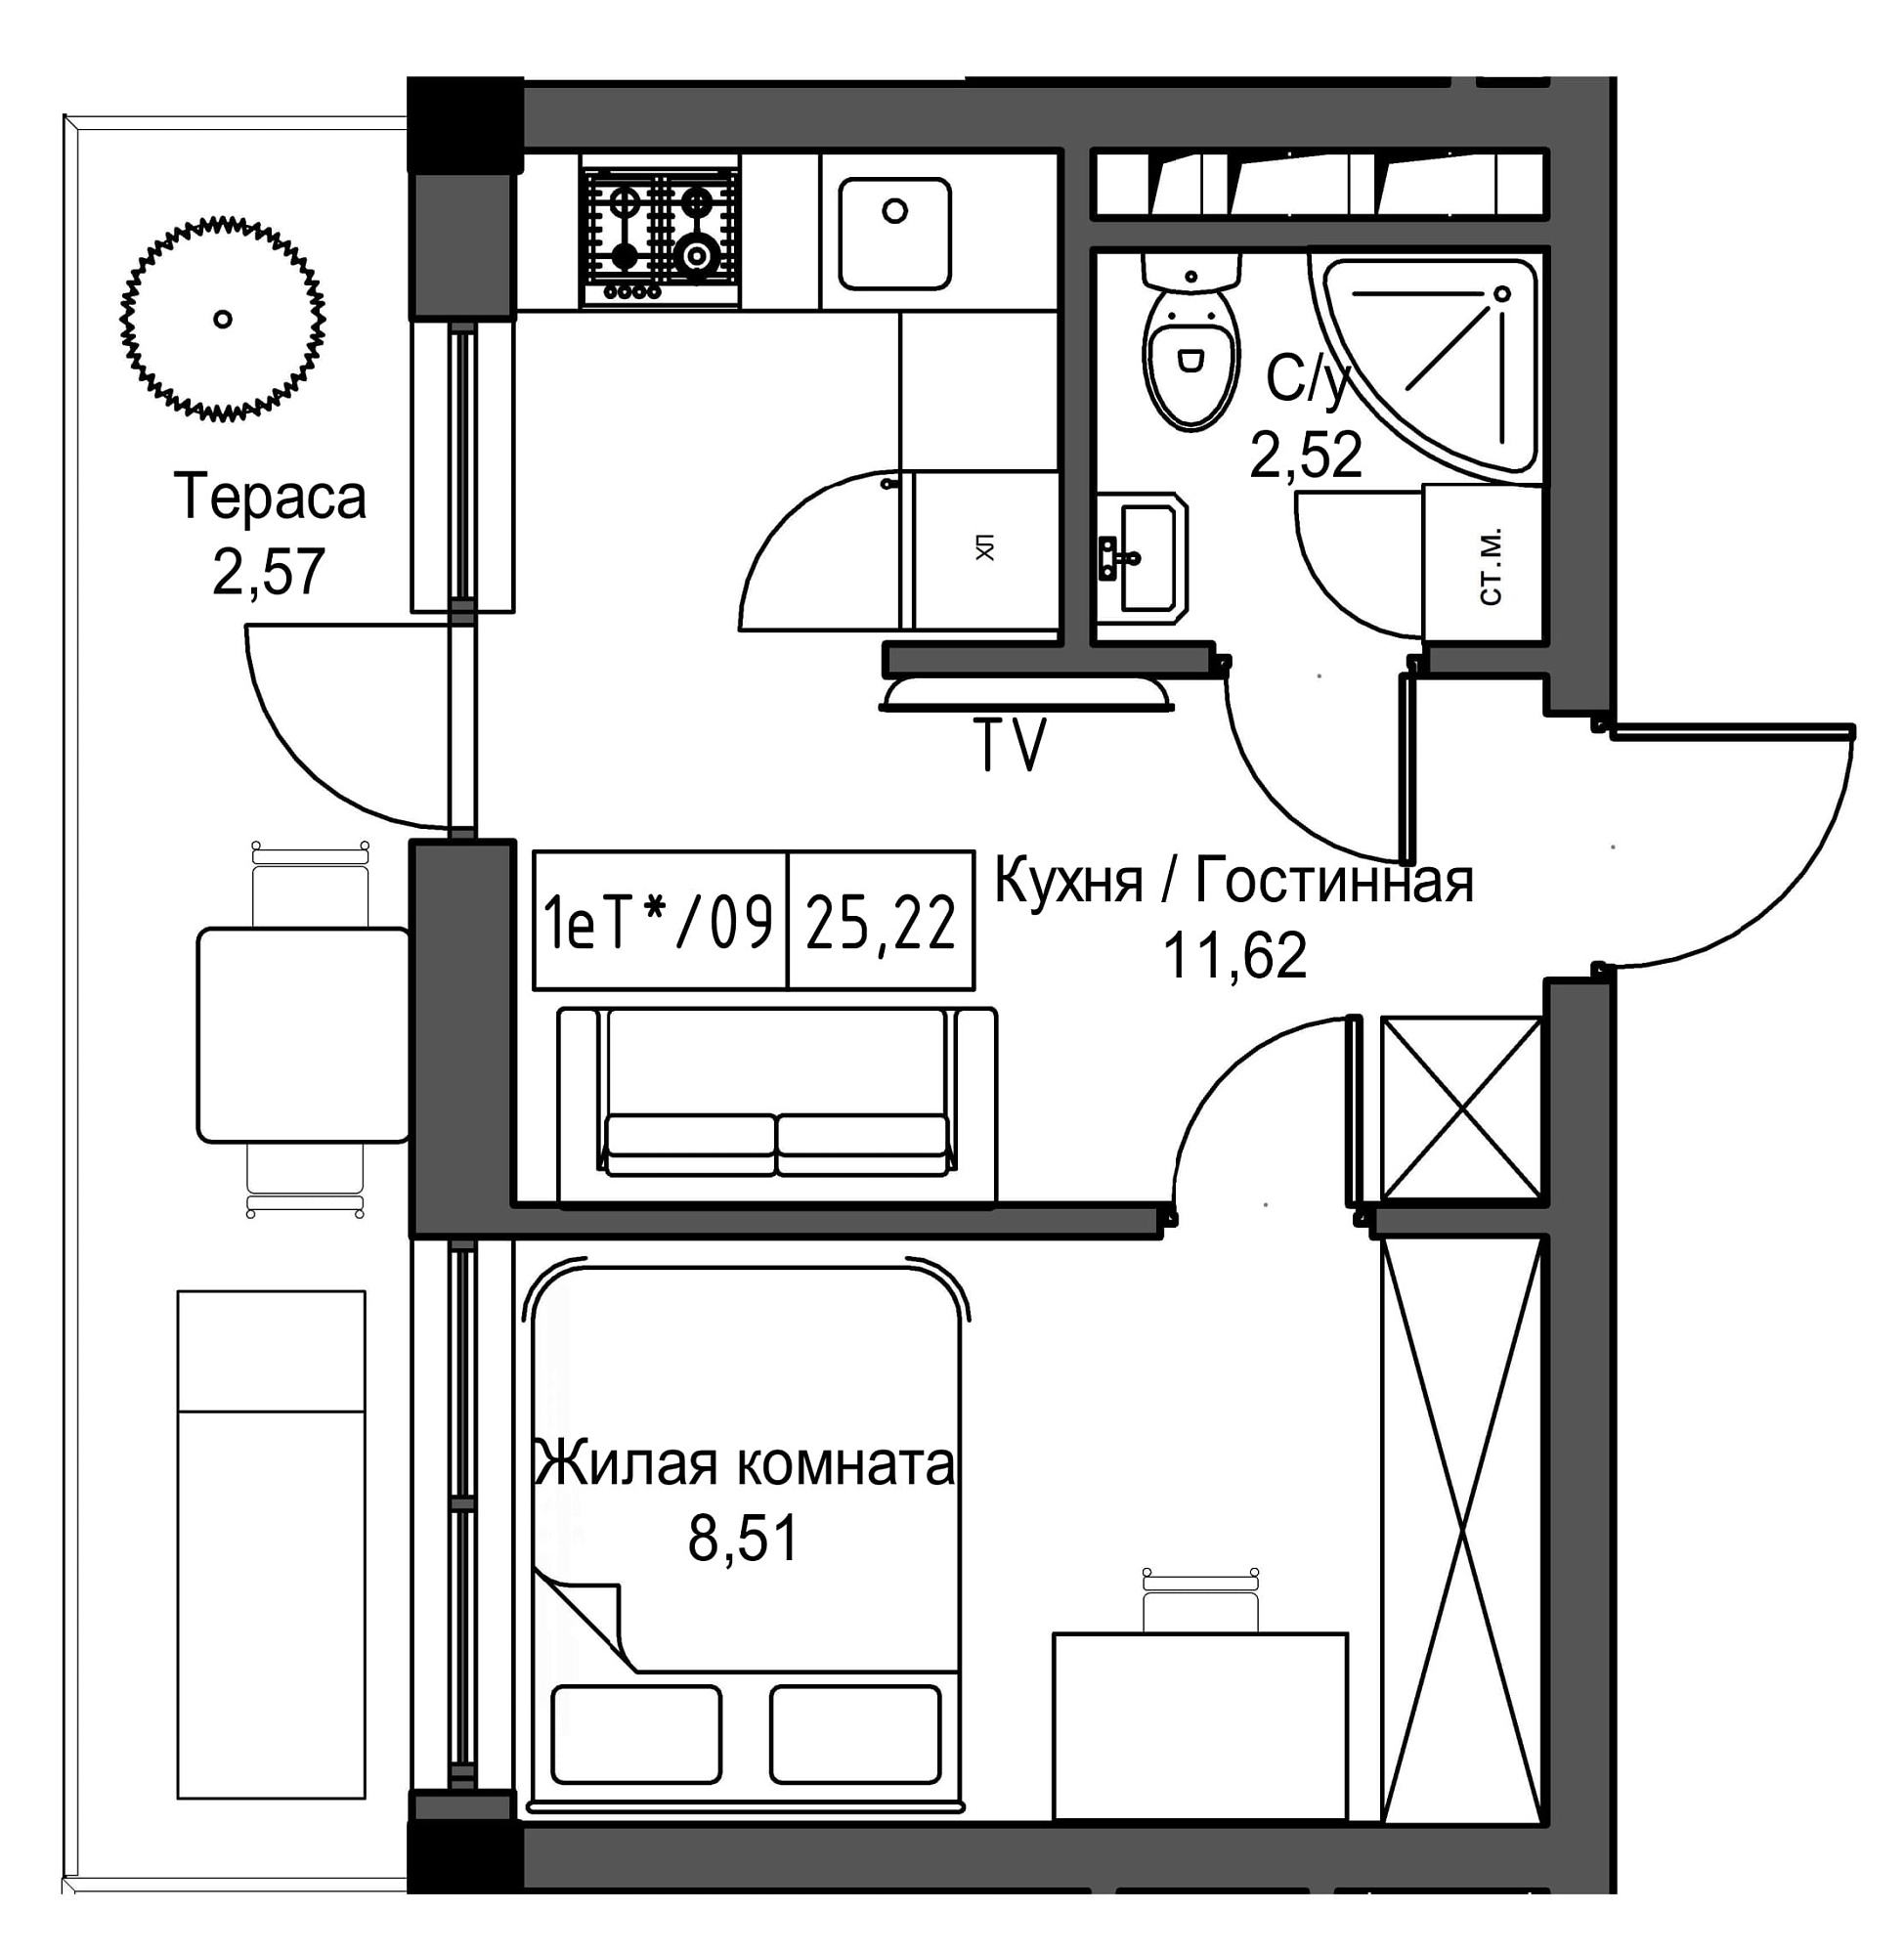 Планування 1-к квартира площею 25.22м2, UM-002-08/0078.